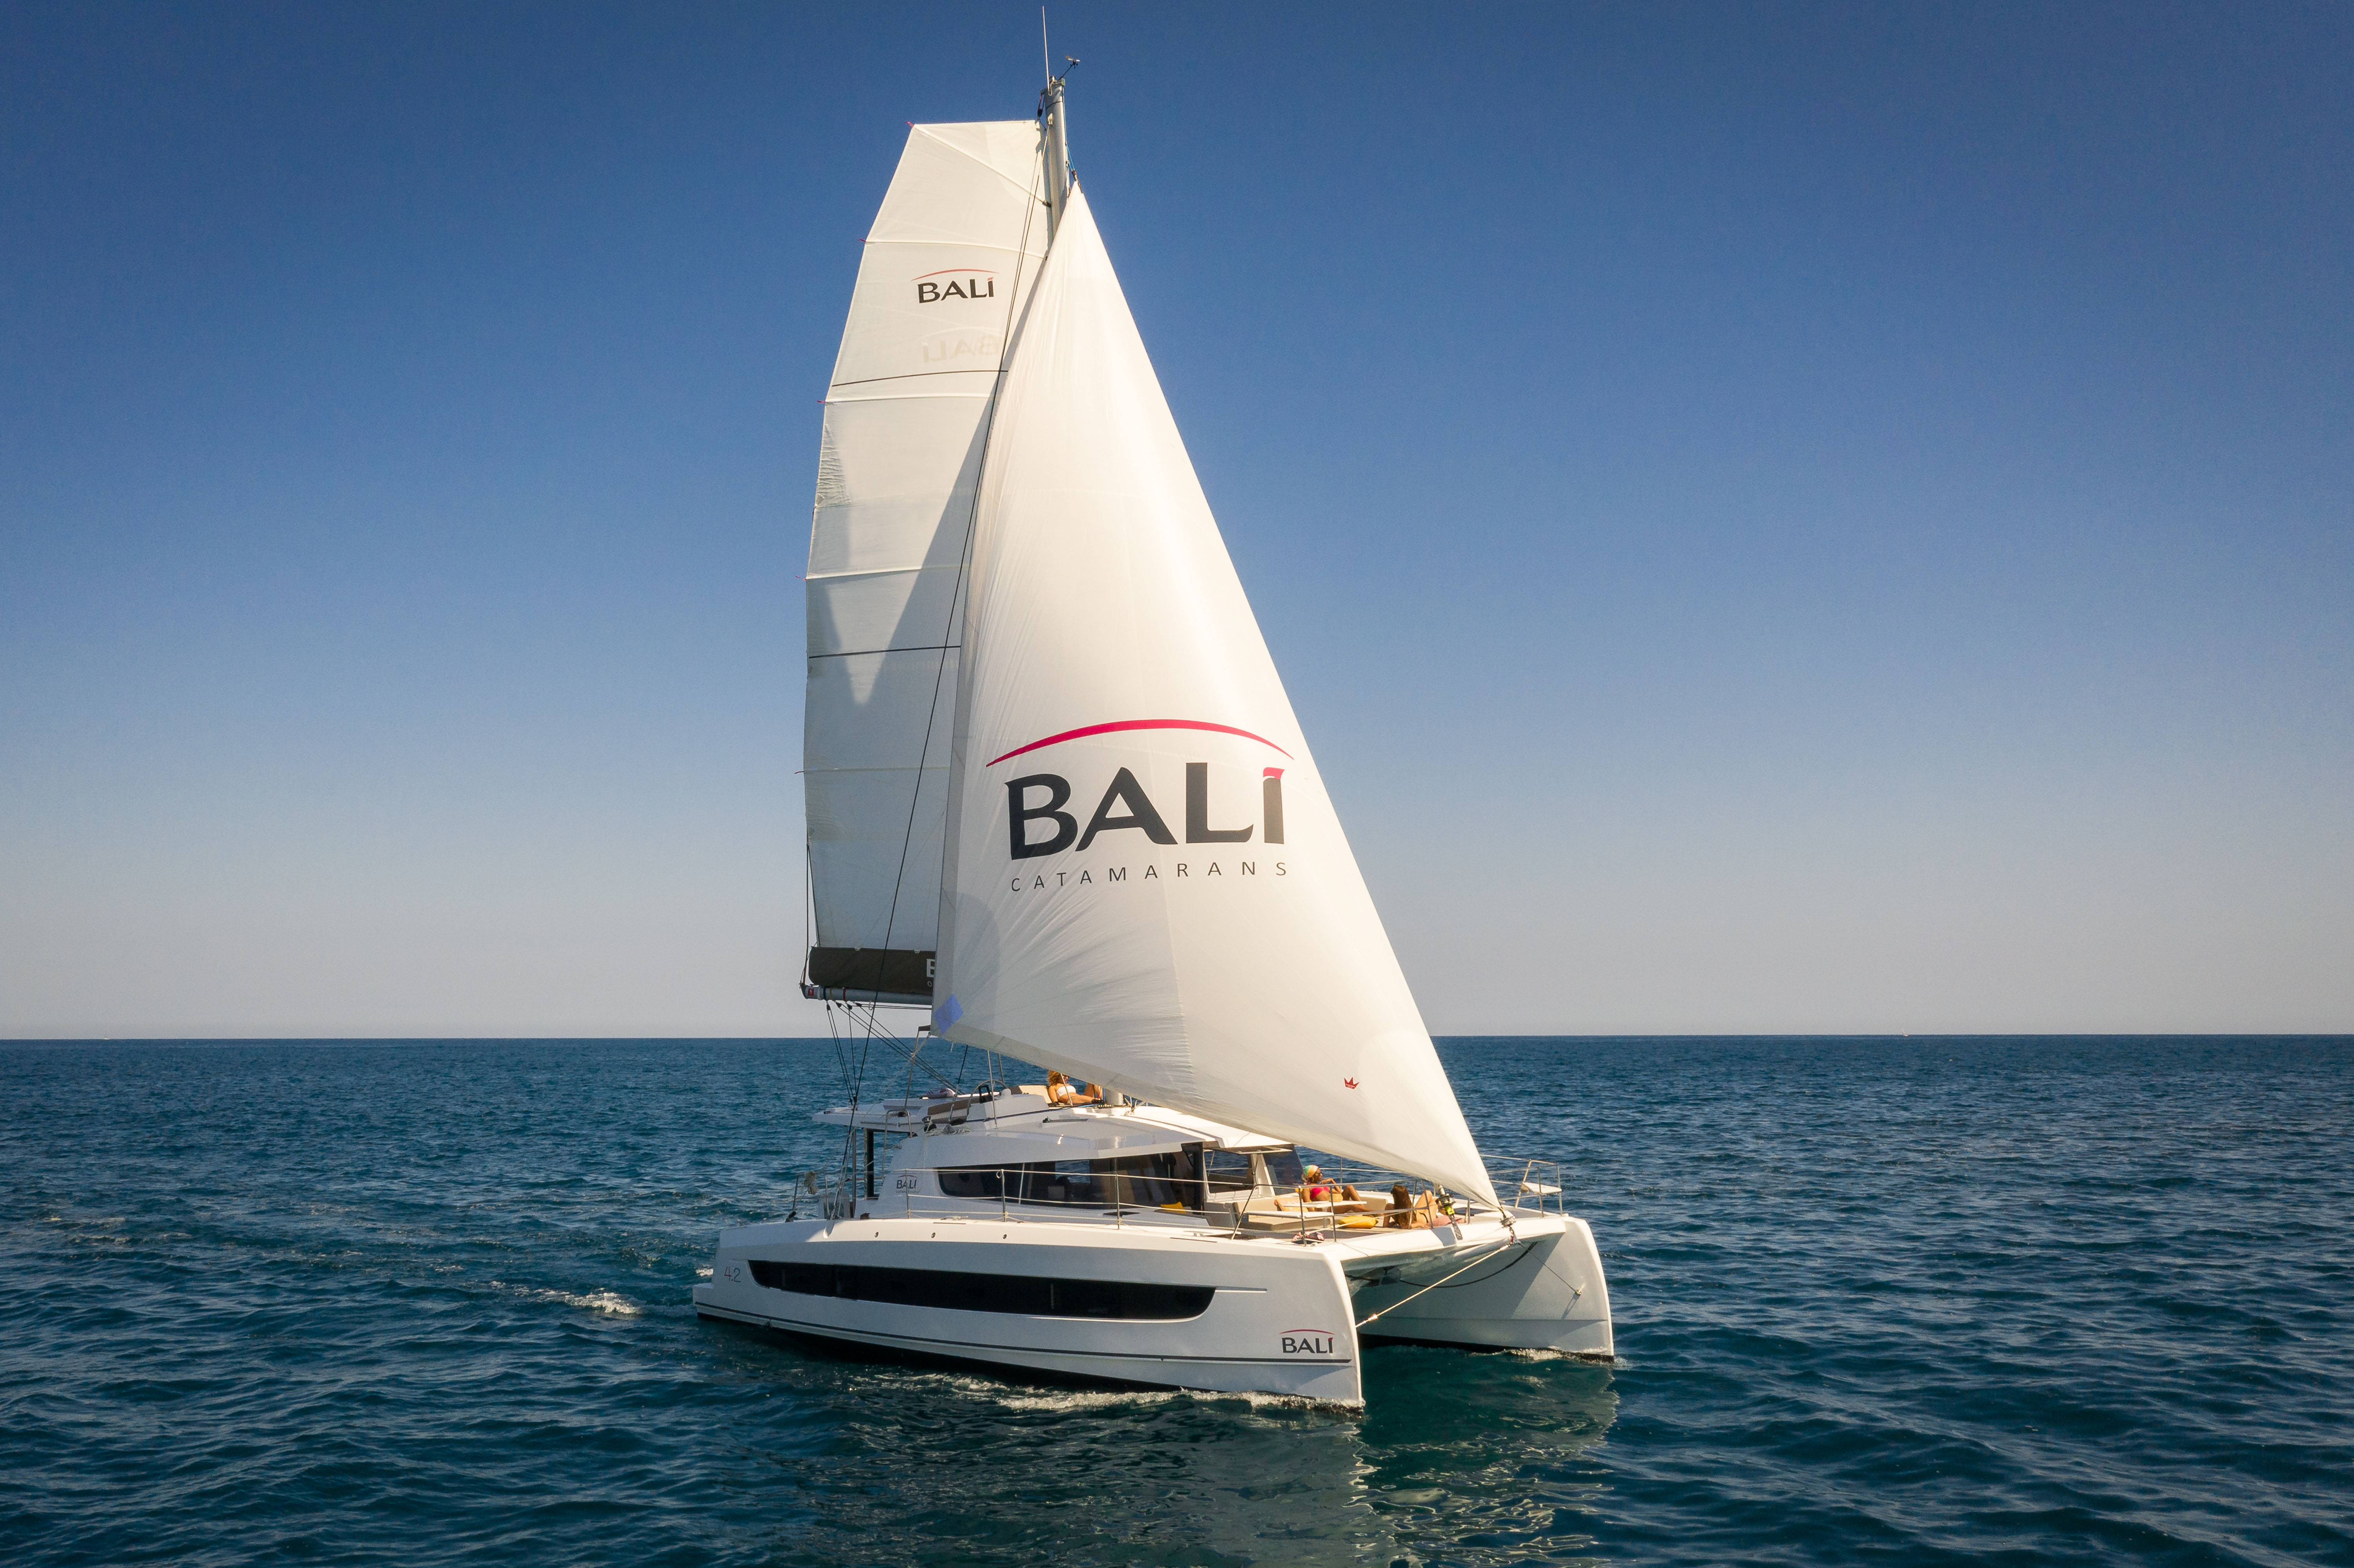 Yachtcharter Bali4 Merlot